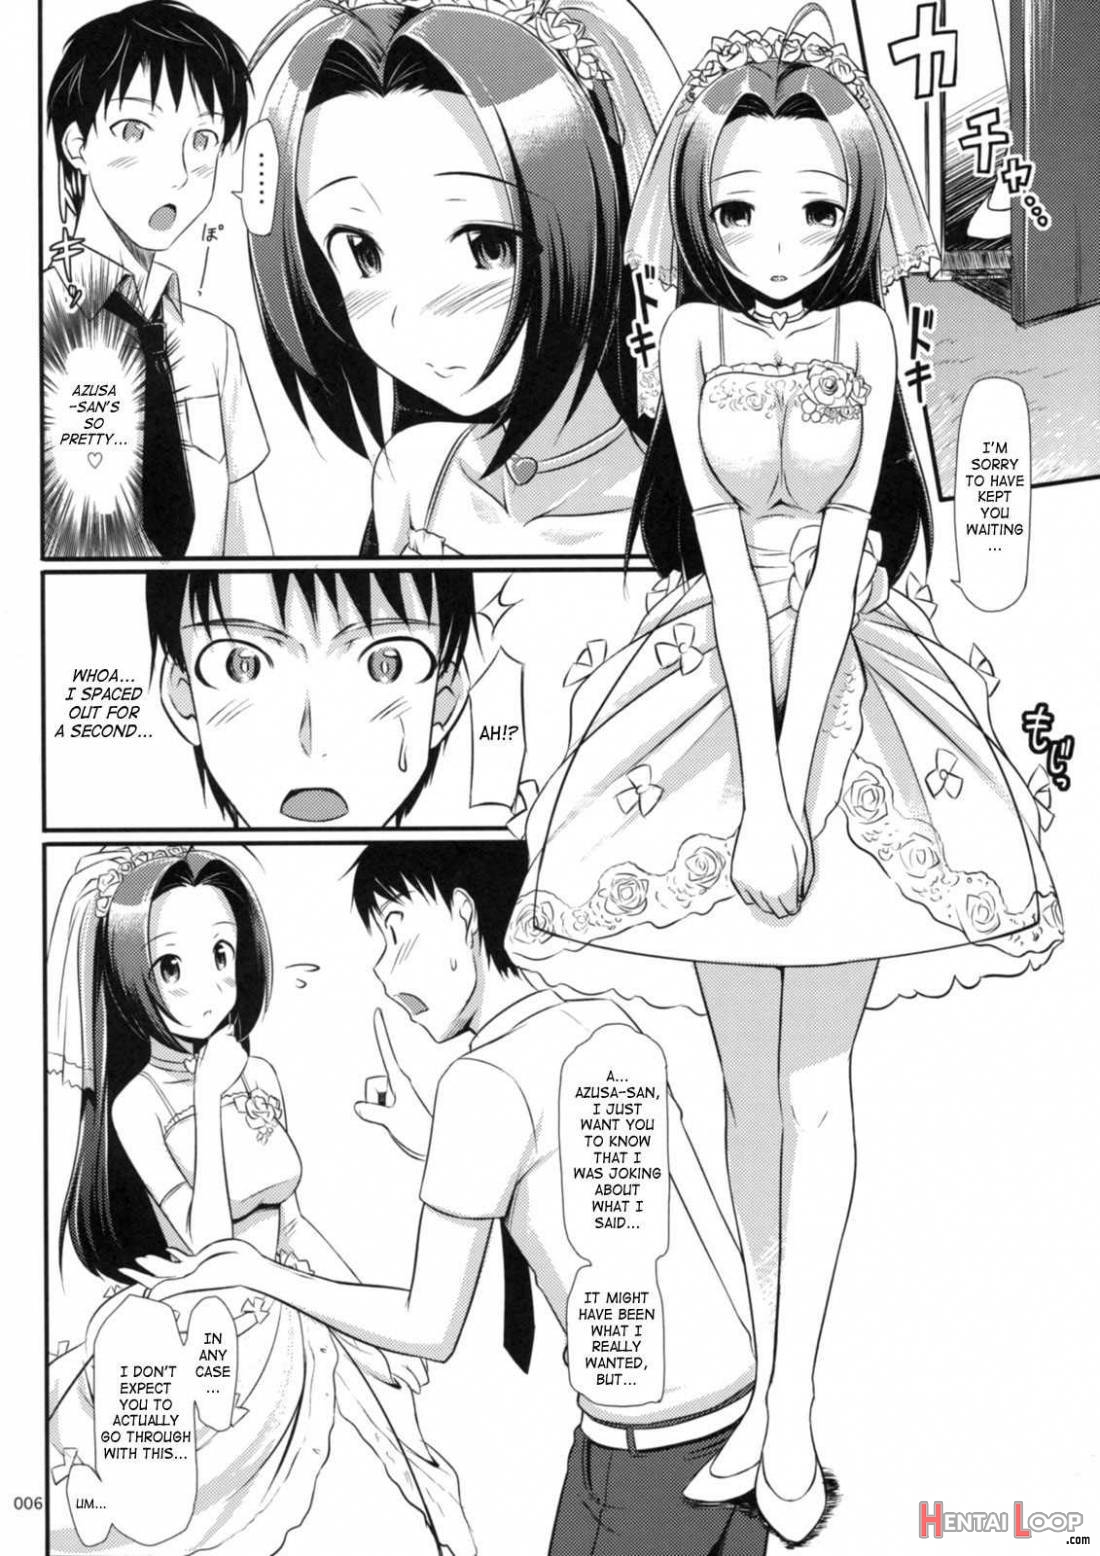 Azusa-san No Present For You! page 6